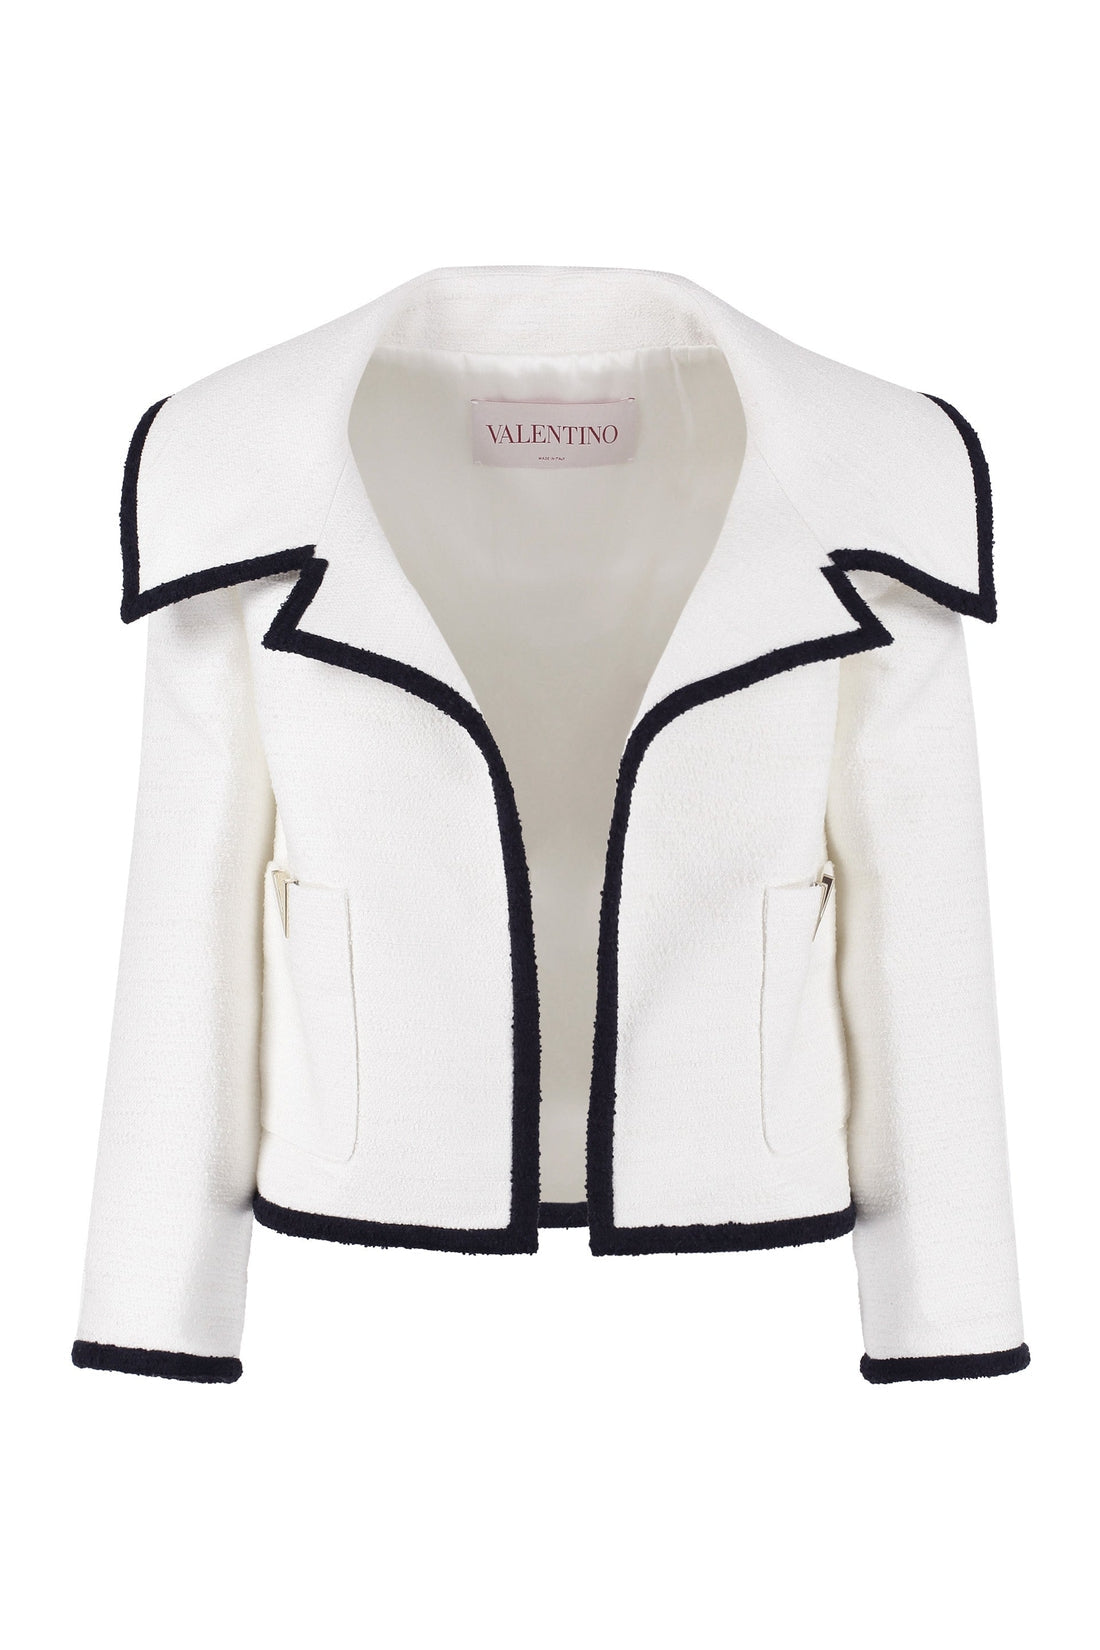 Valentino-OUTLET-SALE-Tweed jacket-ARCHIVIST